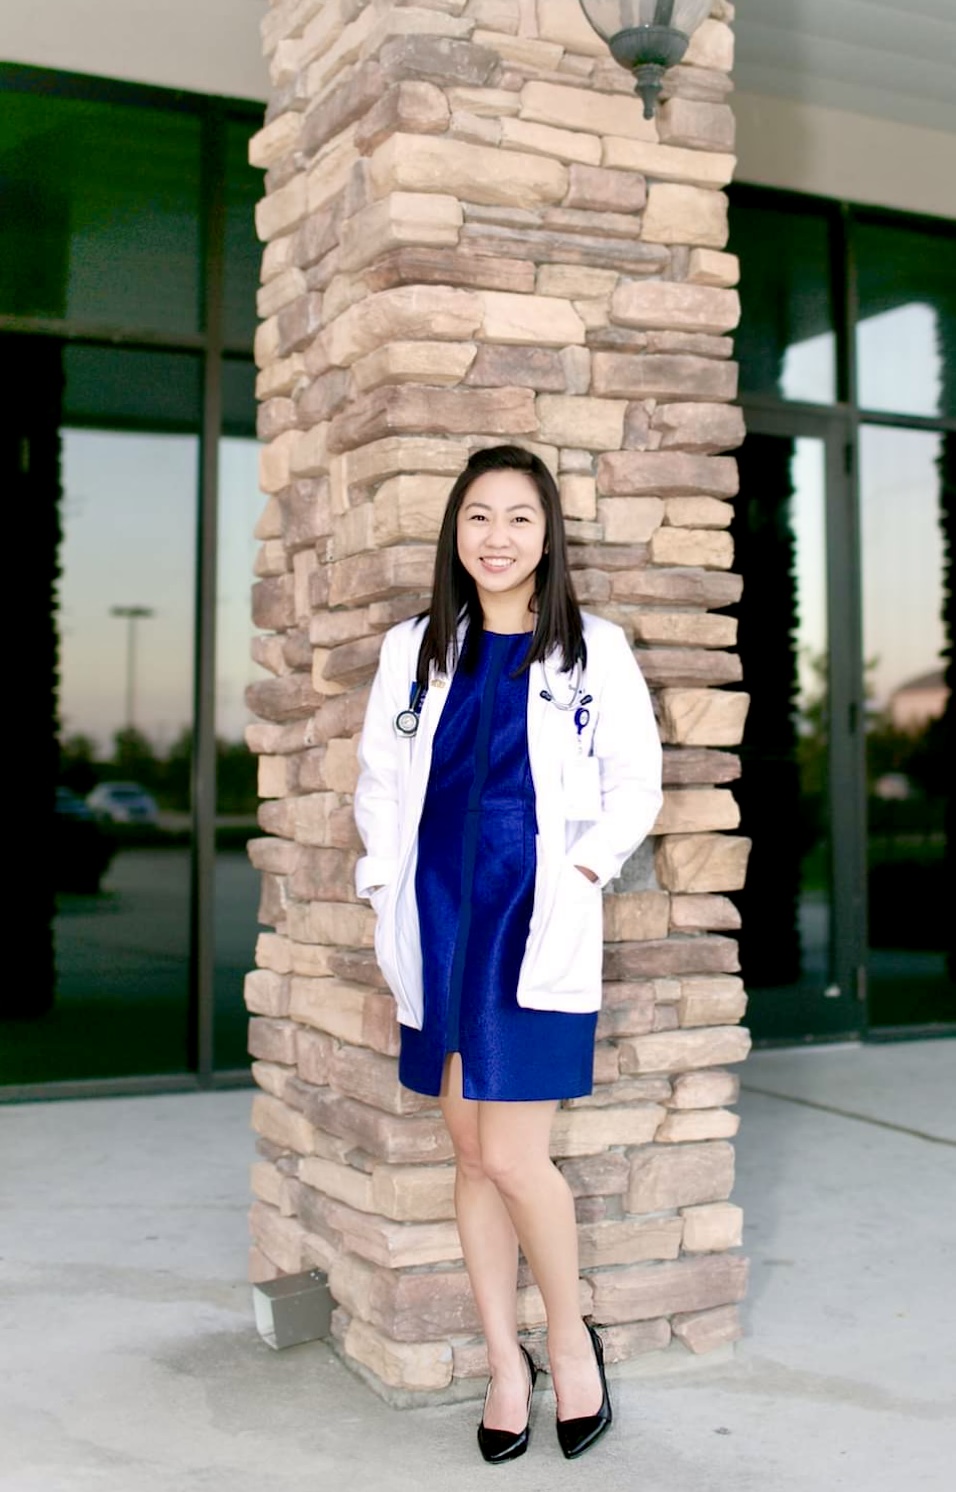 Sophie Lin in MD Jacket